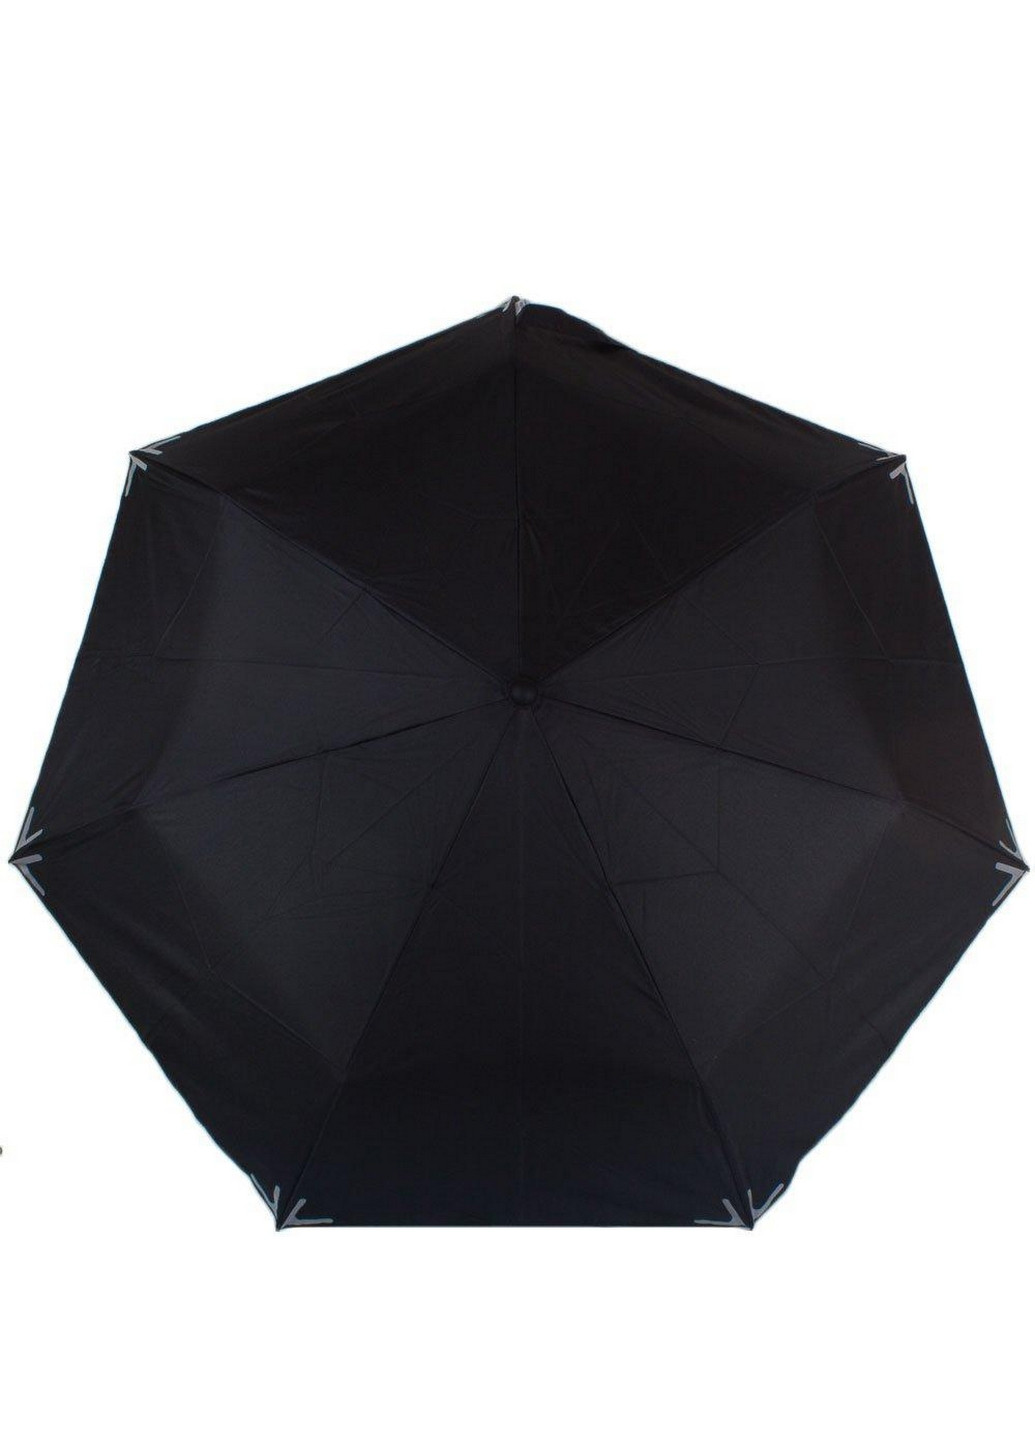 Мужской складной зонт автомат 96 см FARE (260330370)